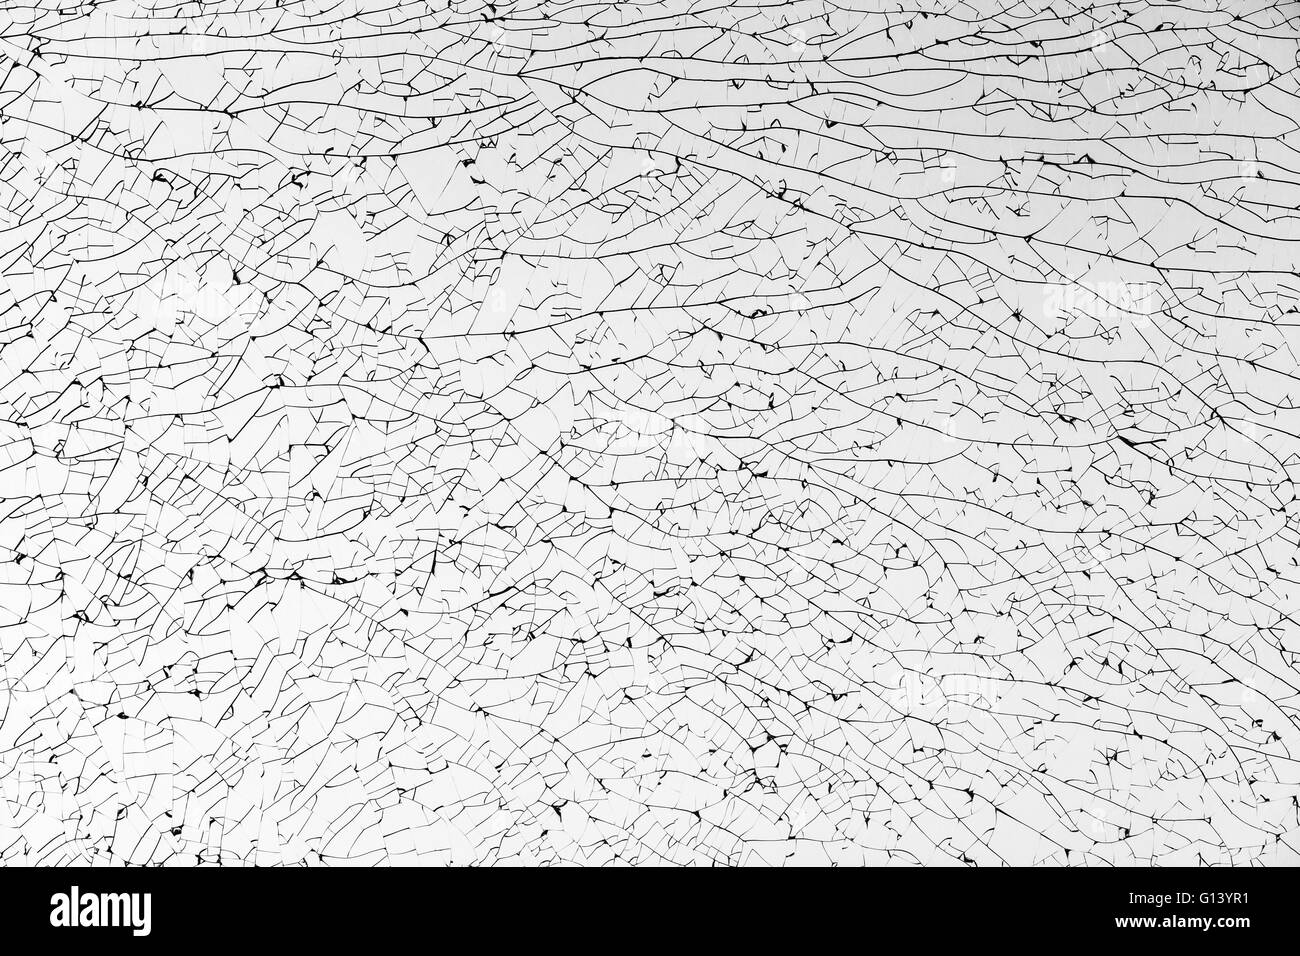 Broken glass with cracks pattern, monochrome background texture Stock Photo